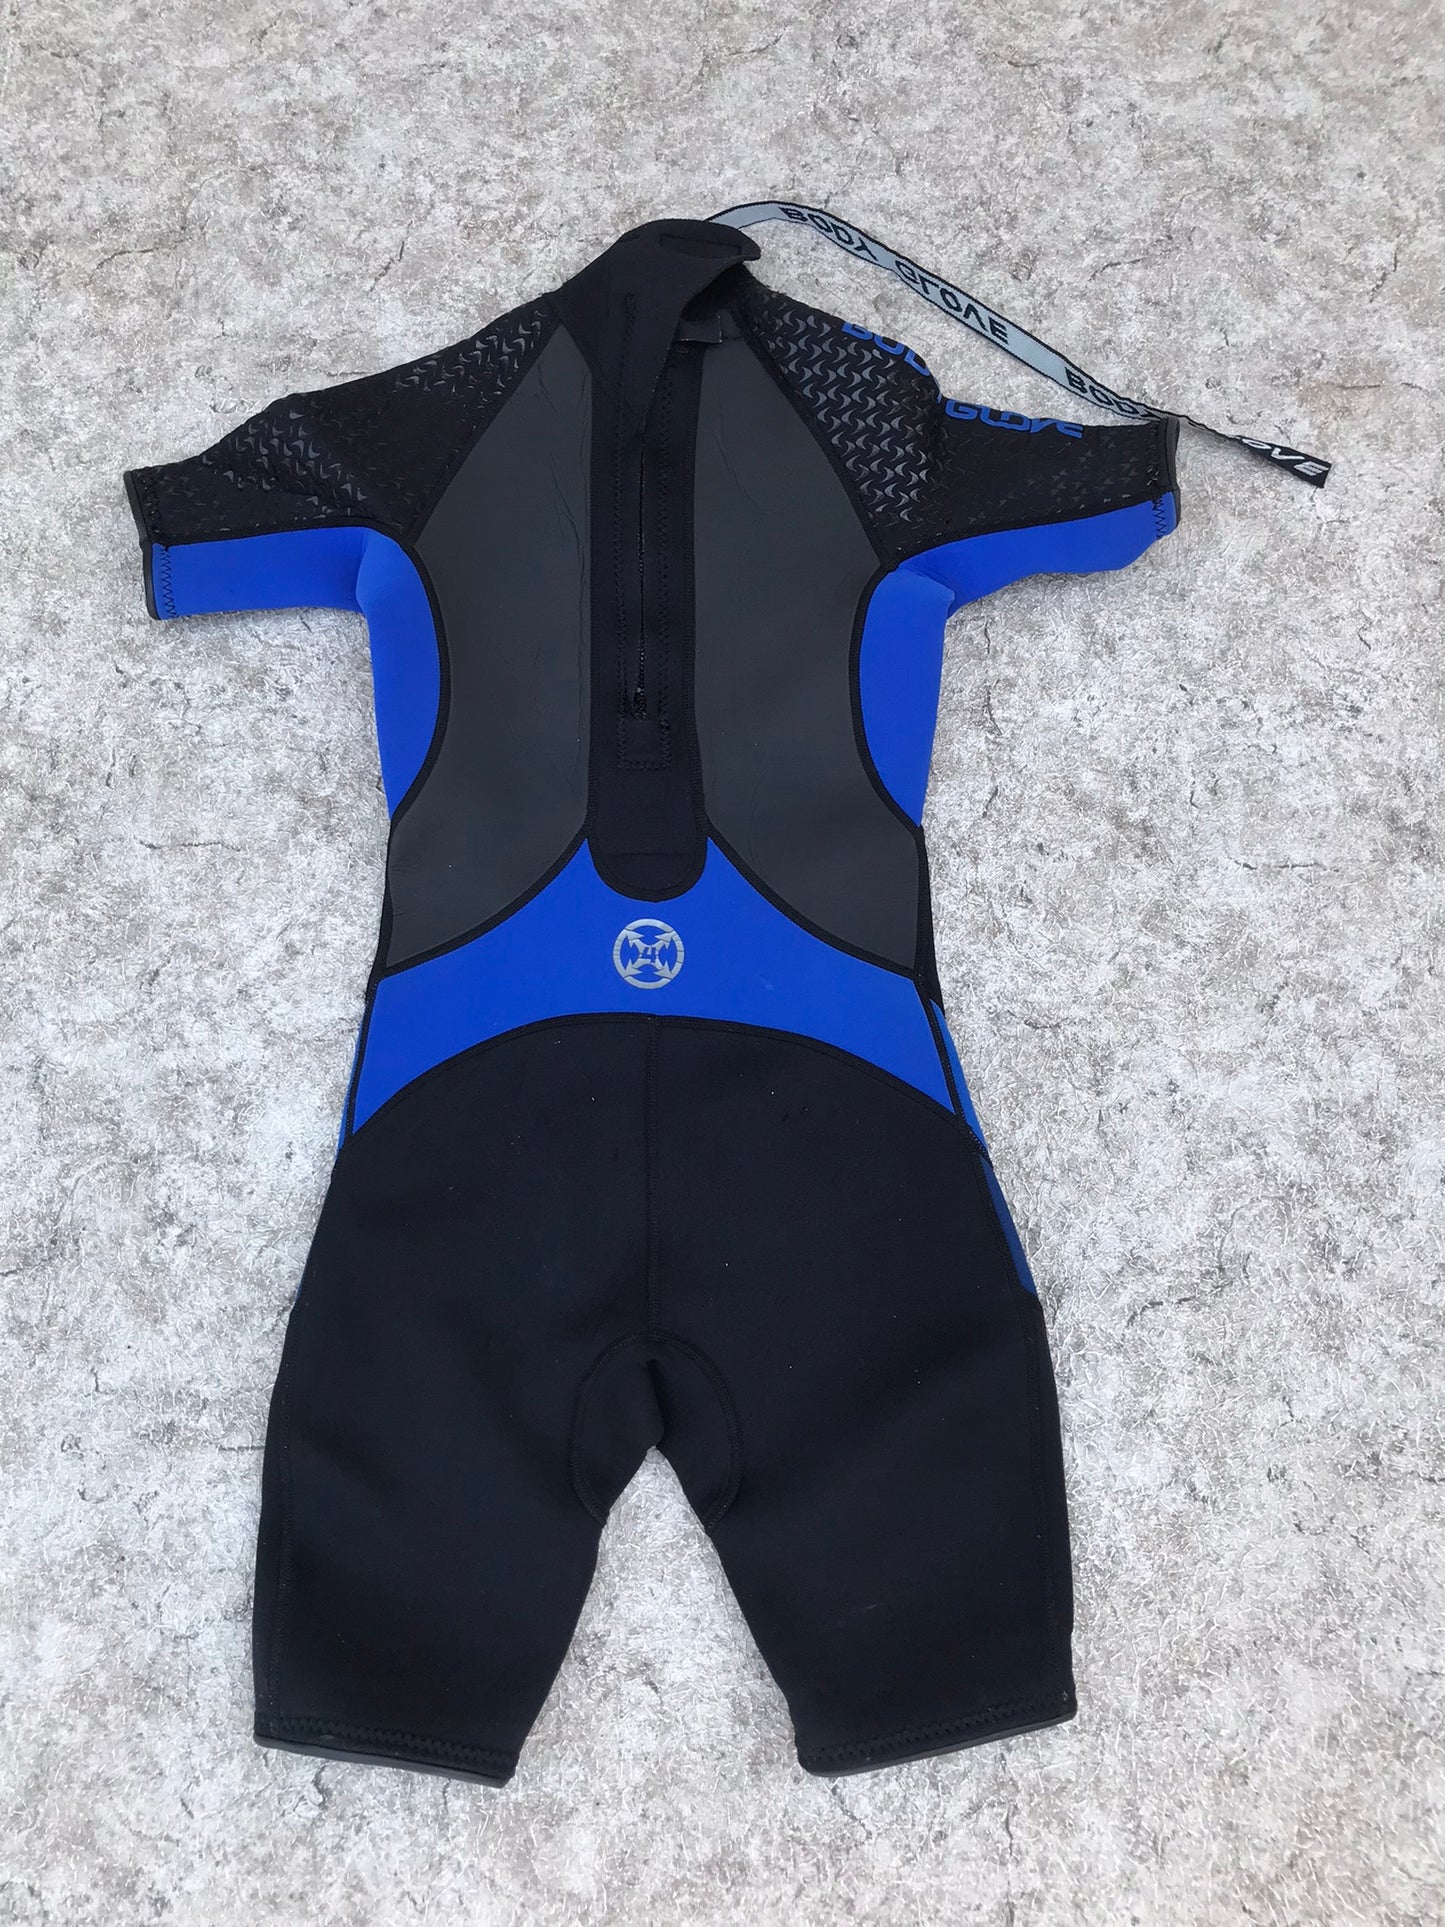 Wetsuit Child Size 10 Body Glove Blue Black 2-3 mm Neoprene